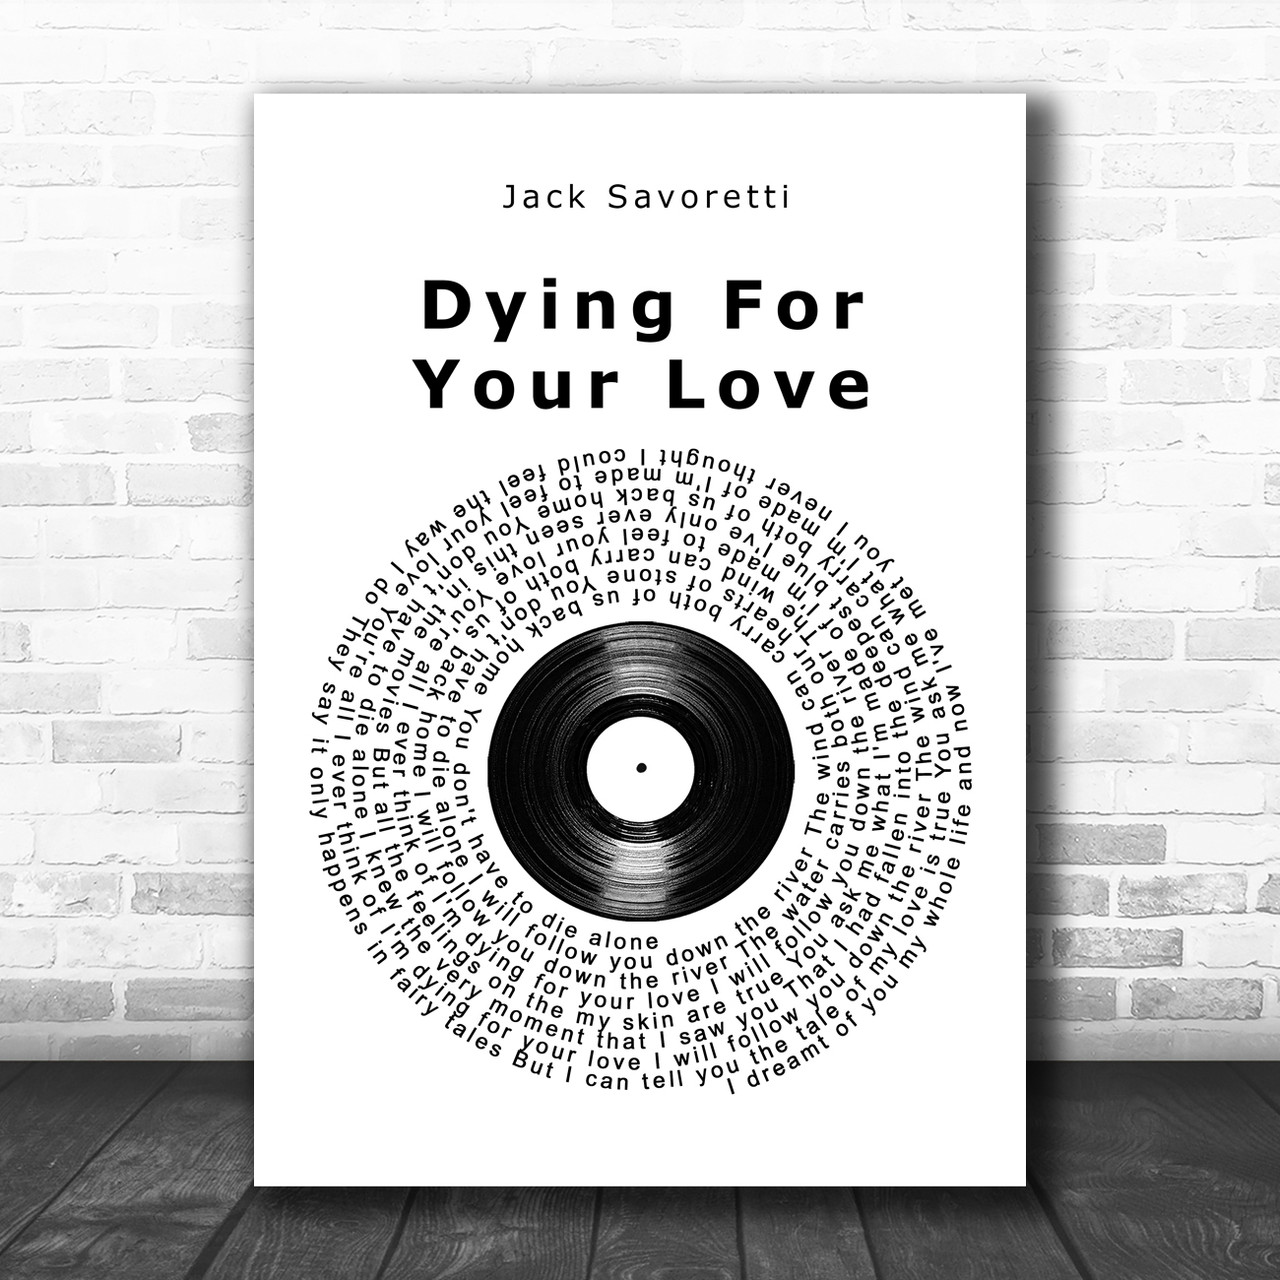 For Your Love Lyrics - Follow Lyrics